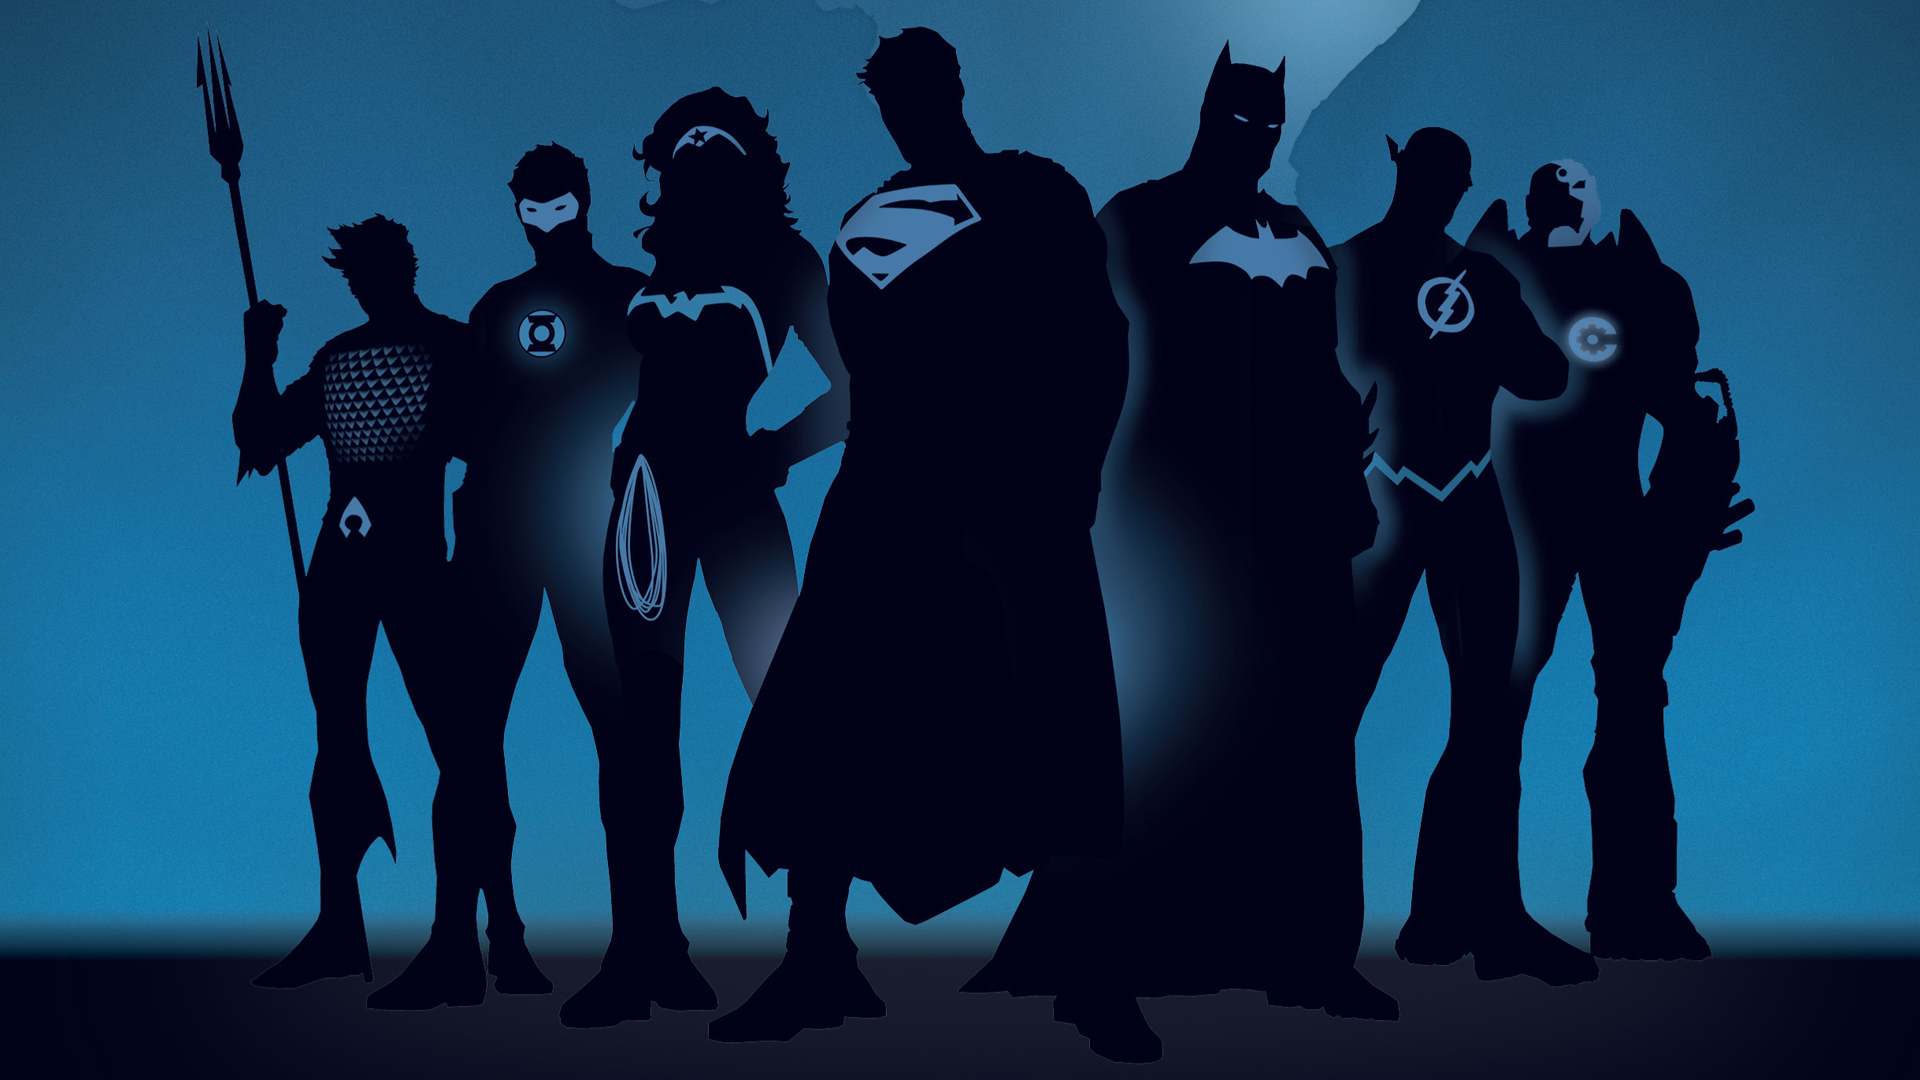 batman, comics, diana prince, justice league, superman, bruce wayne, dc comics, wonder woman, aquaman, barry allen, cyborg (dc comics), flash, green lantern, the dark knight